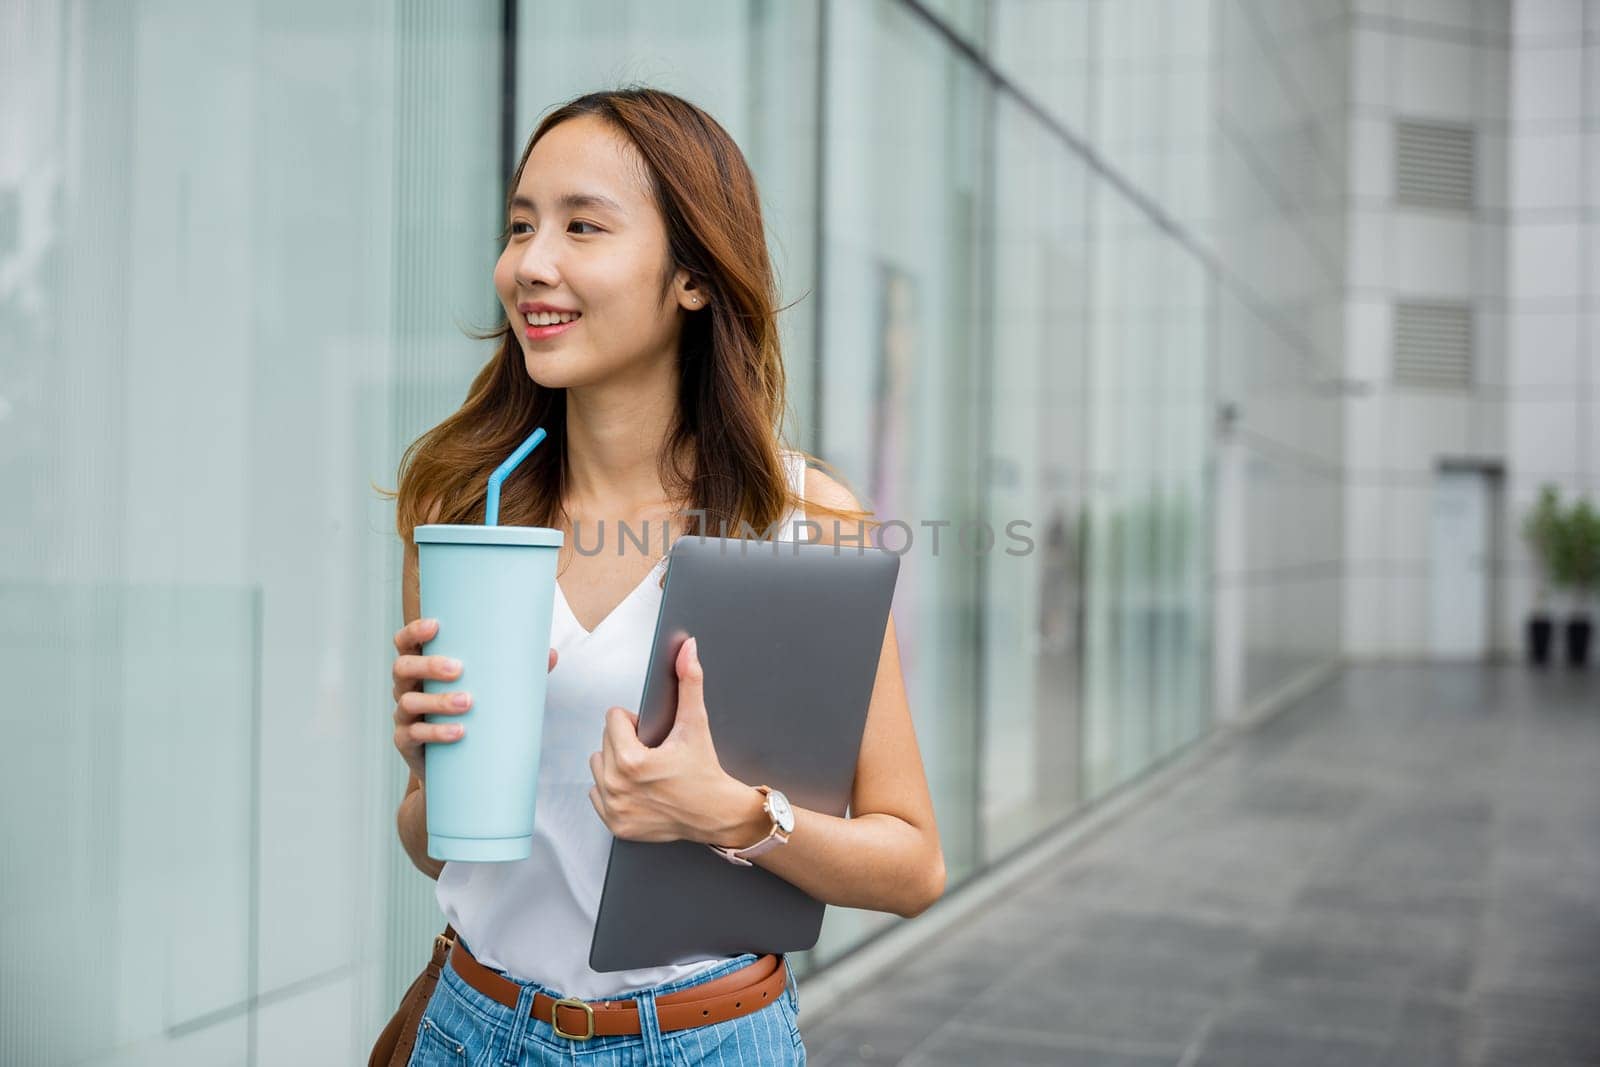 female entrepreneur with laptop and tumbler mug water multitasking between holiday shopping and work by Sorapop